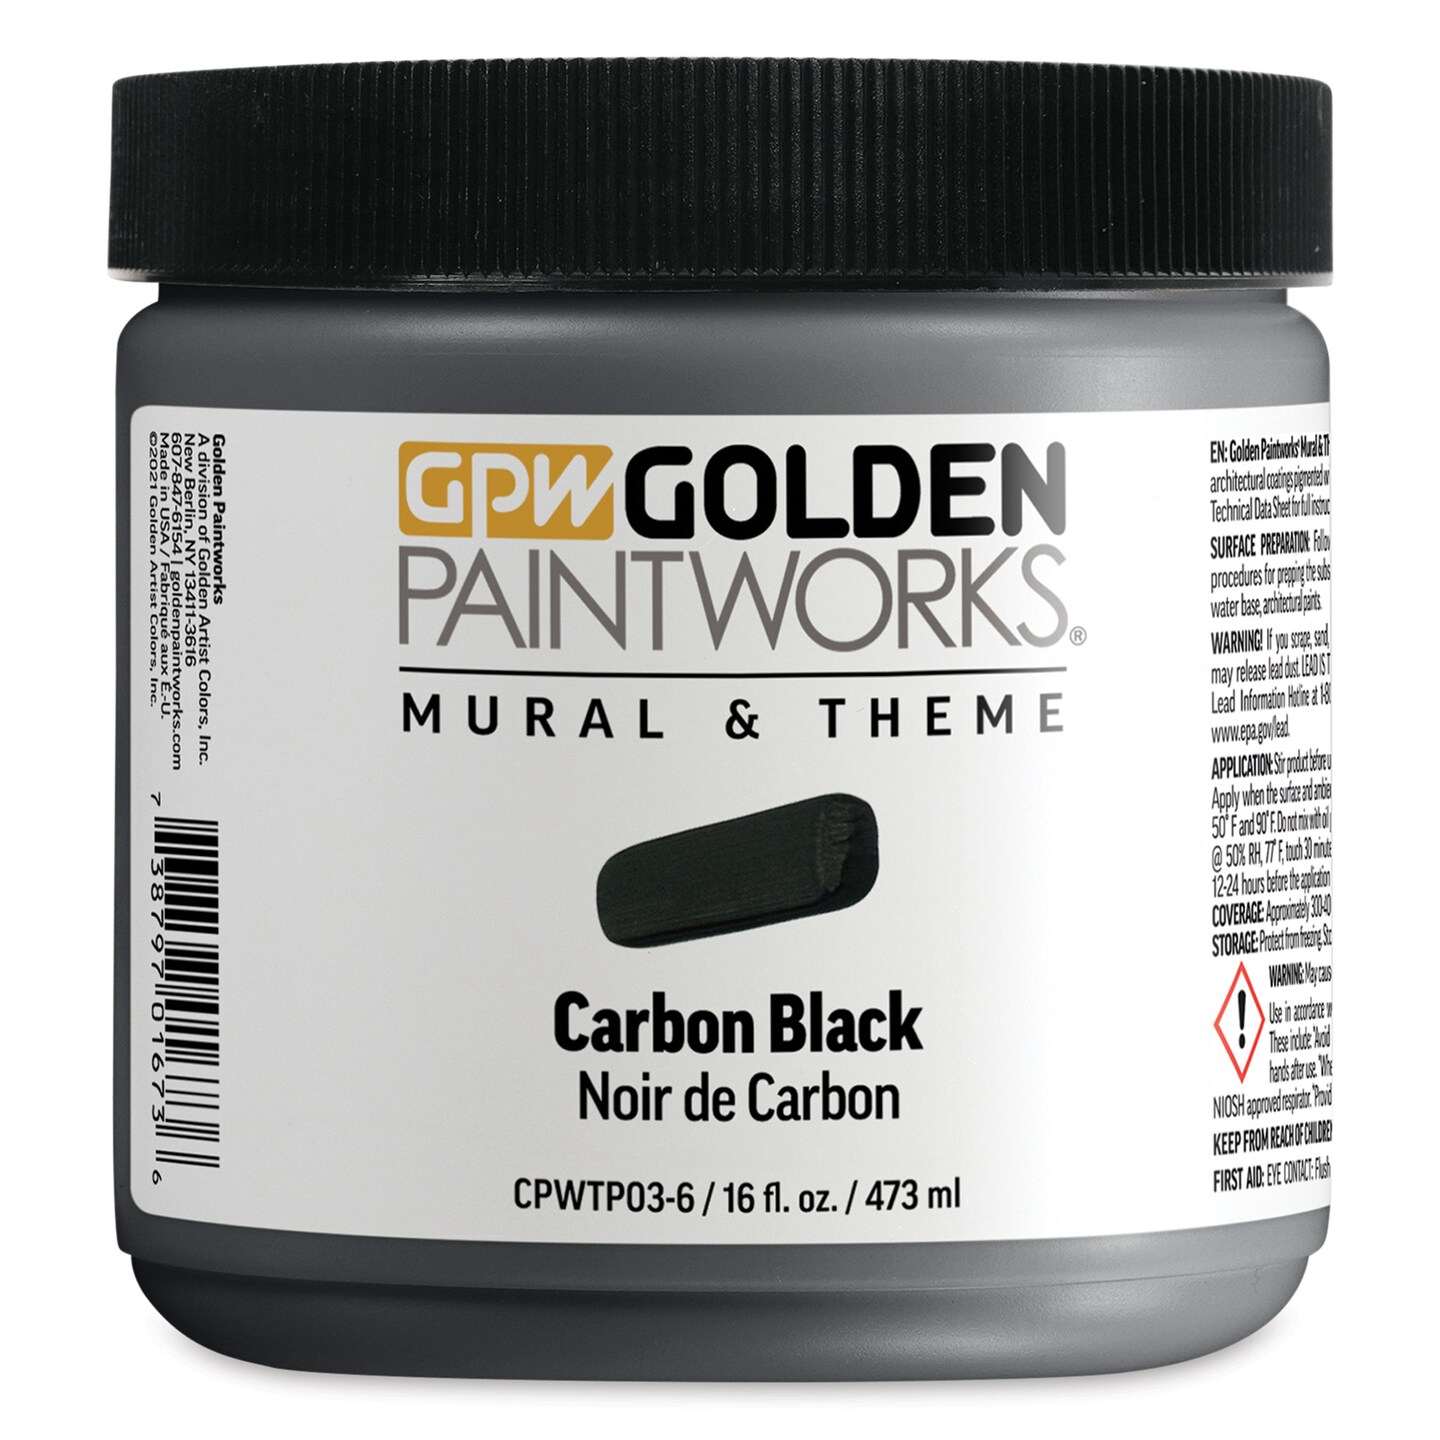 Golden Paintworks Mural and Theme Acrylic Paint - Carbon Black, 16 oz, Jar